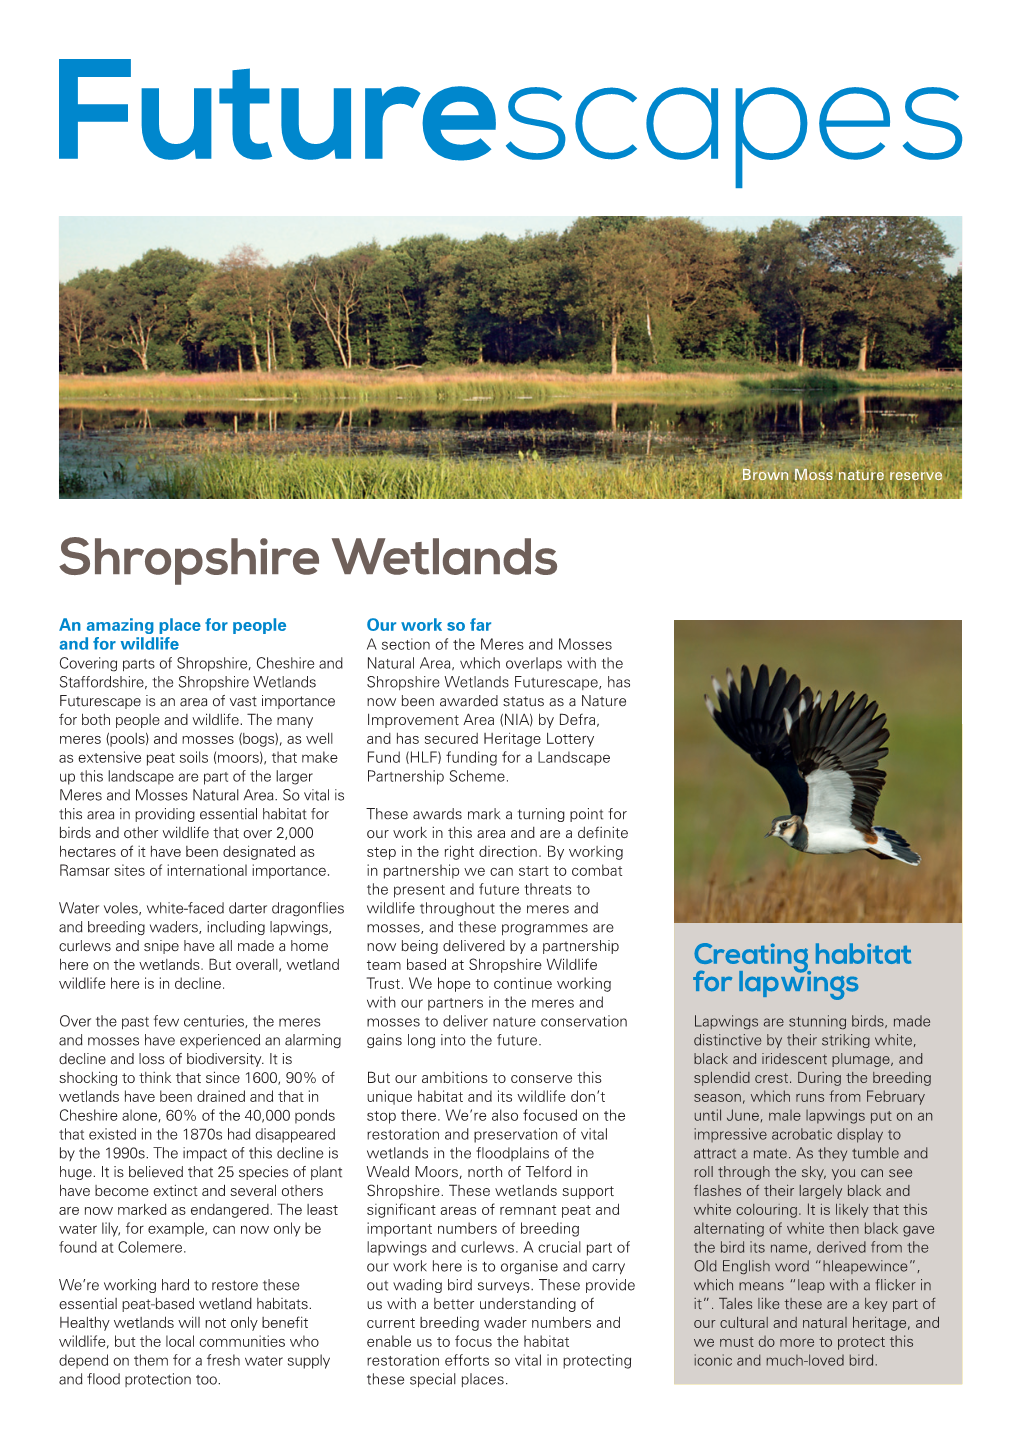 Shropshire Wetlands